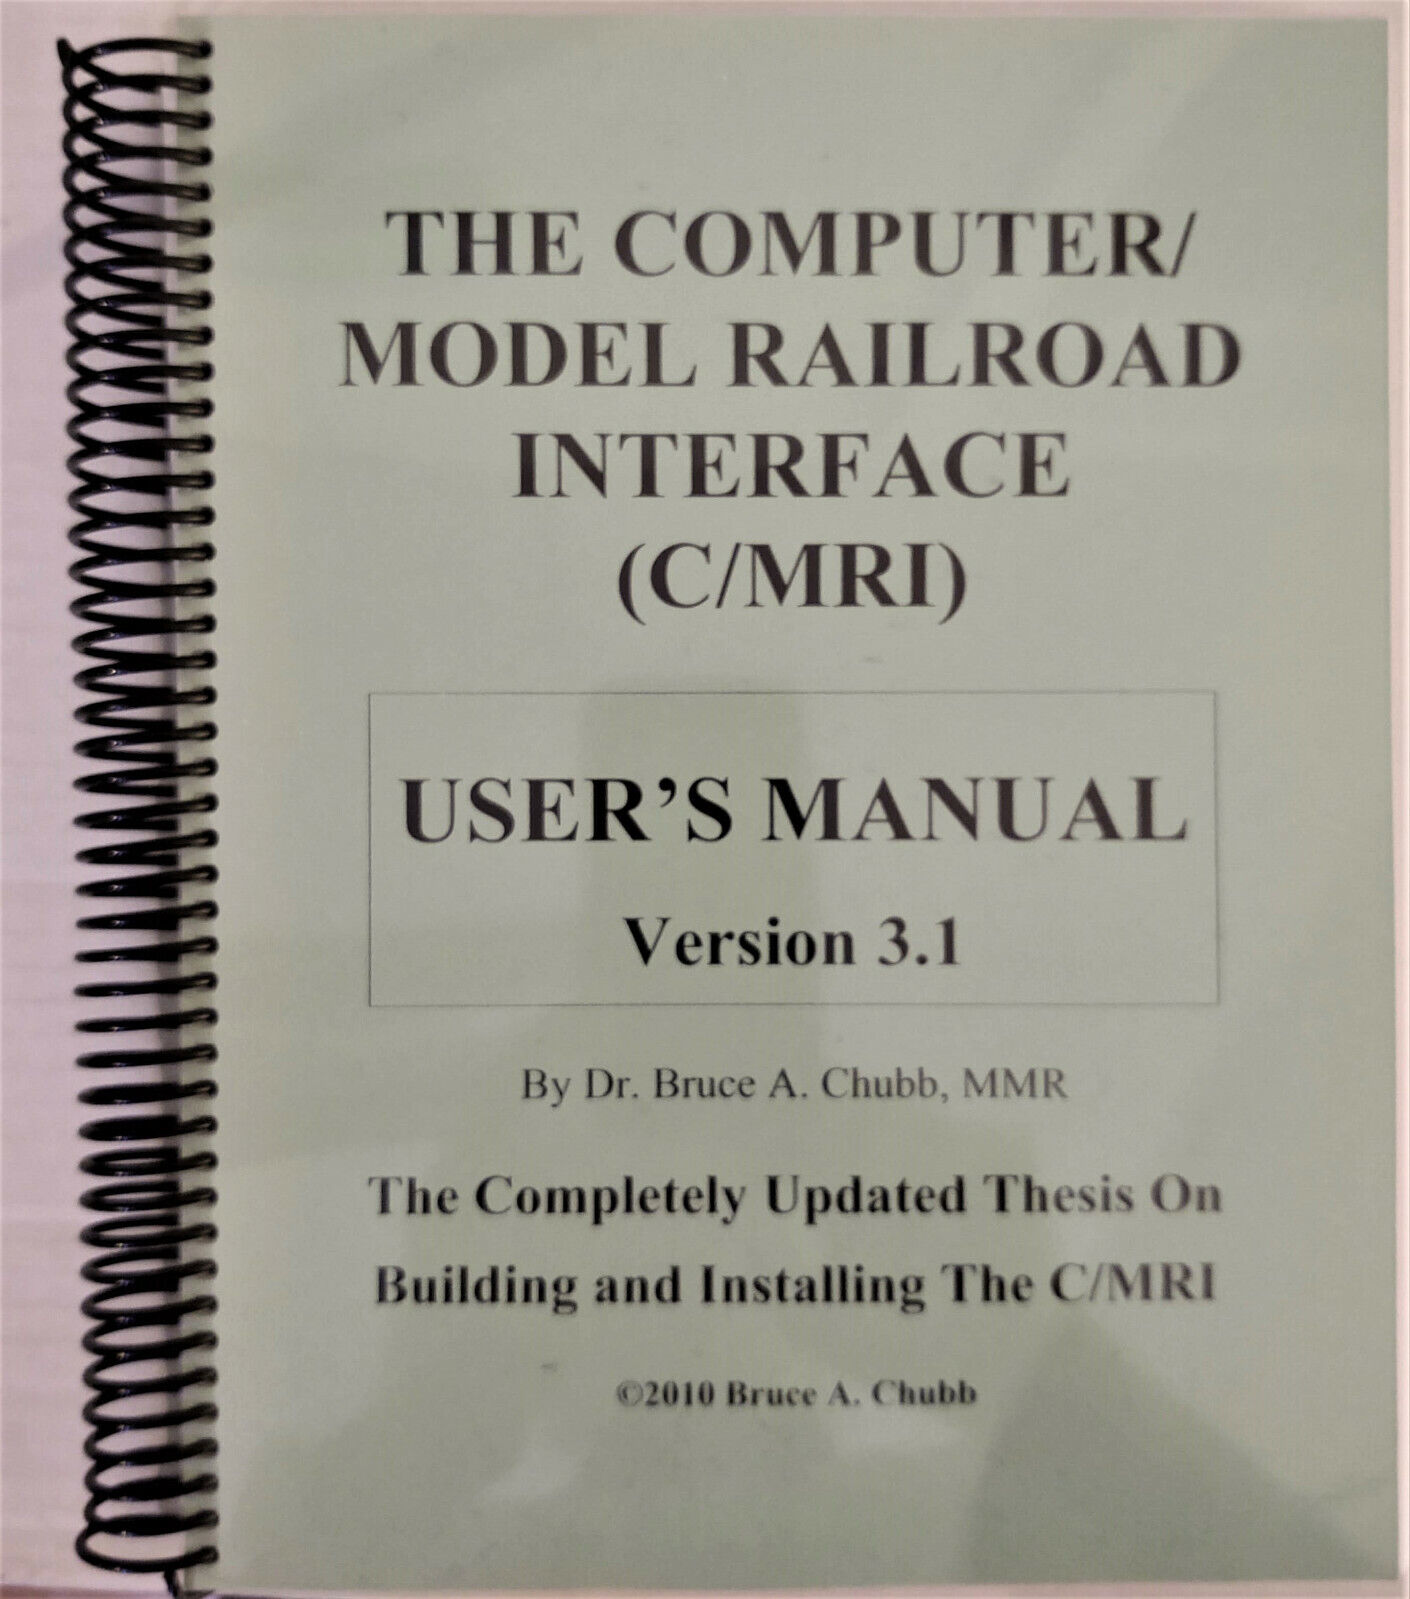 THE COMPUTER/MODEL RAILROADER INTERFACE (C/MRI) Users Manual Version 3.1 2010